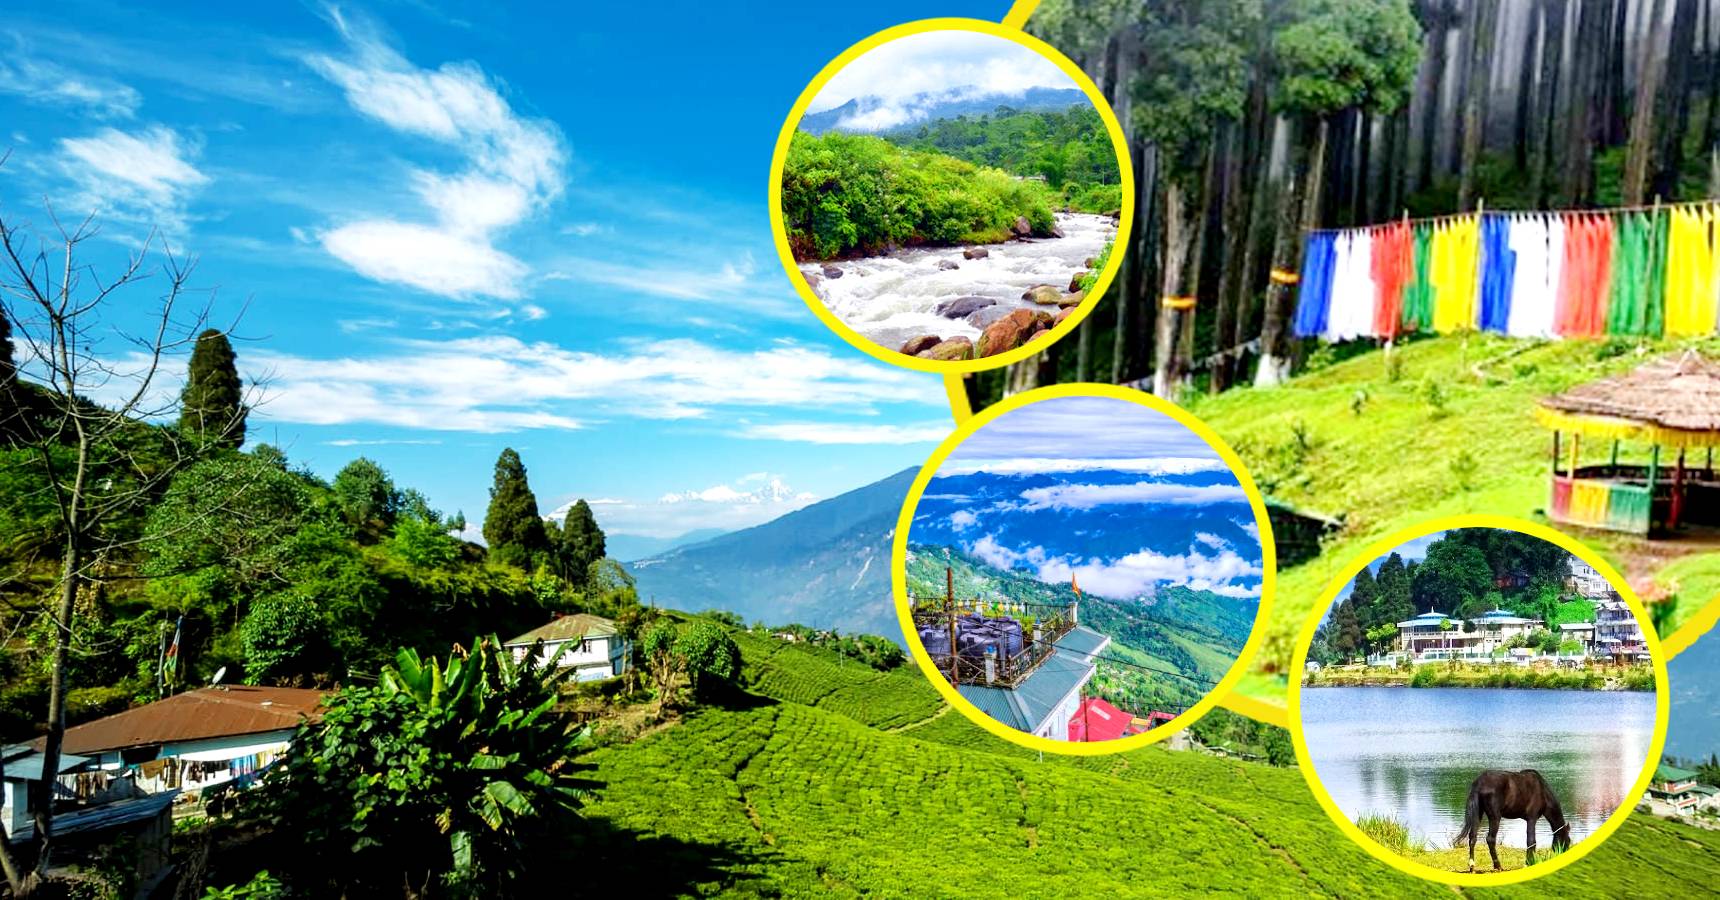 Darjeeling North Bengal trip planning for 4 days